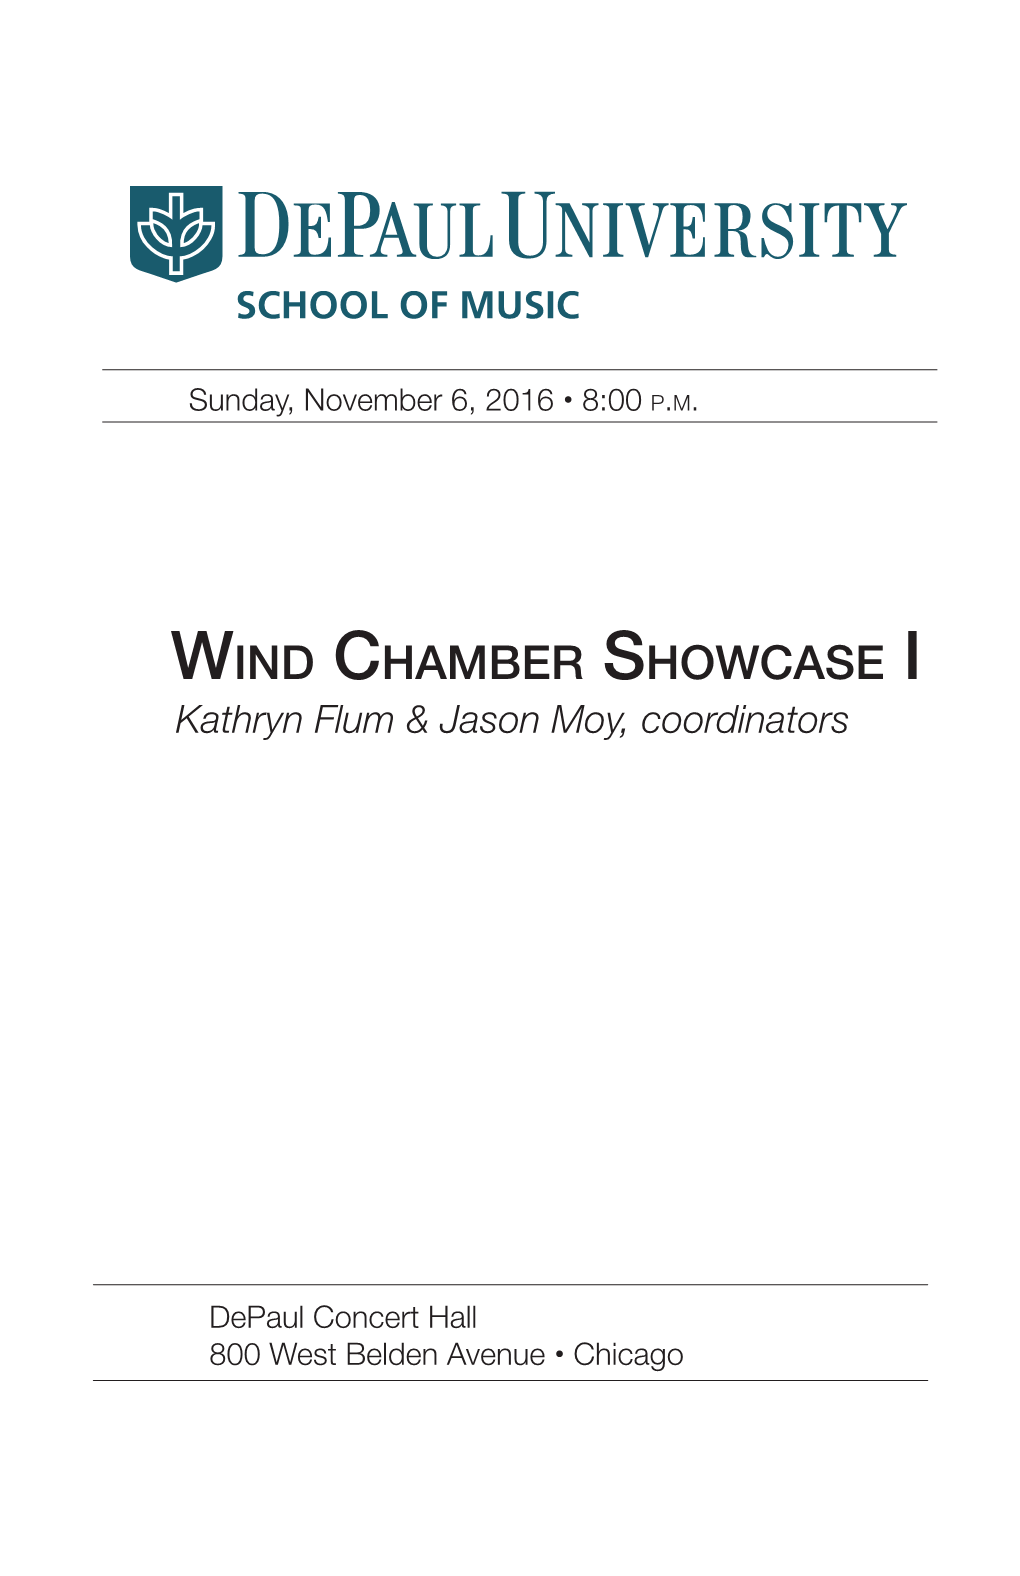 Wind Chamber Showcase I Kathryn Flum & Jason Moy, Coordinators